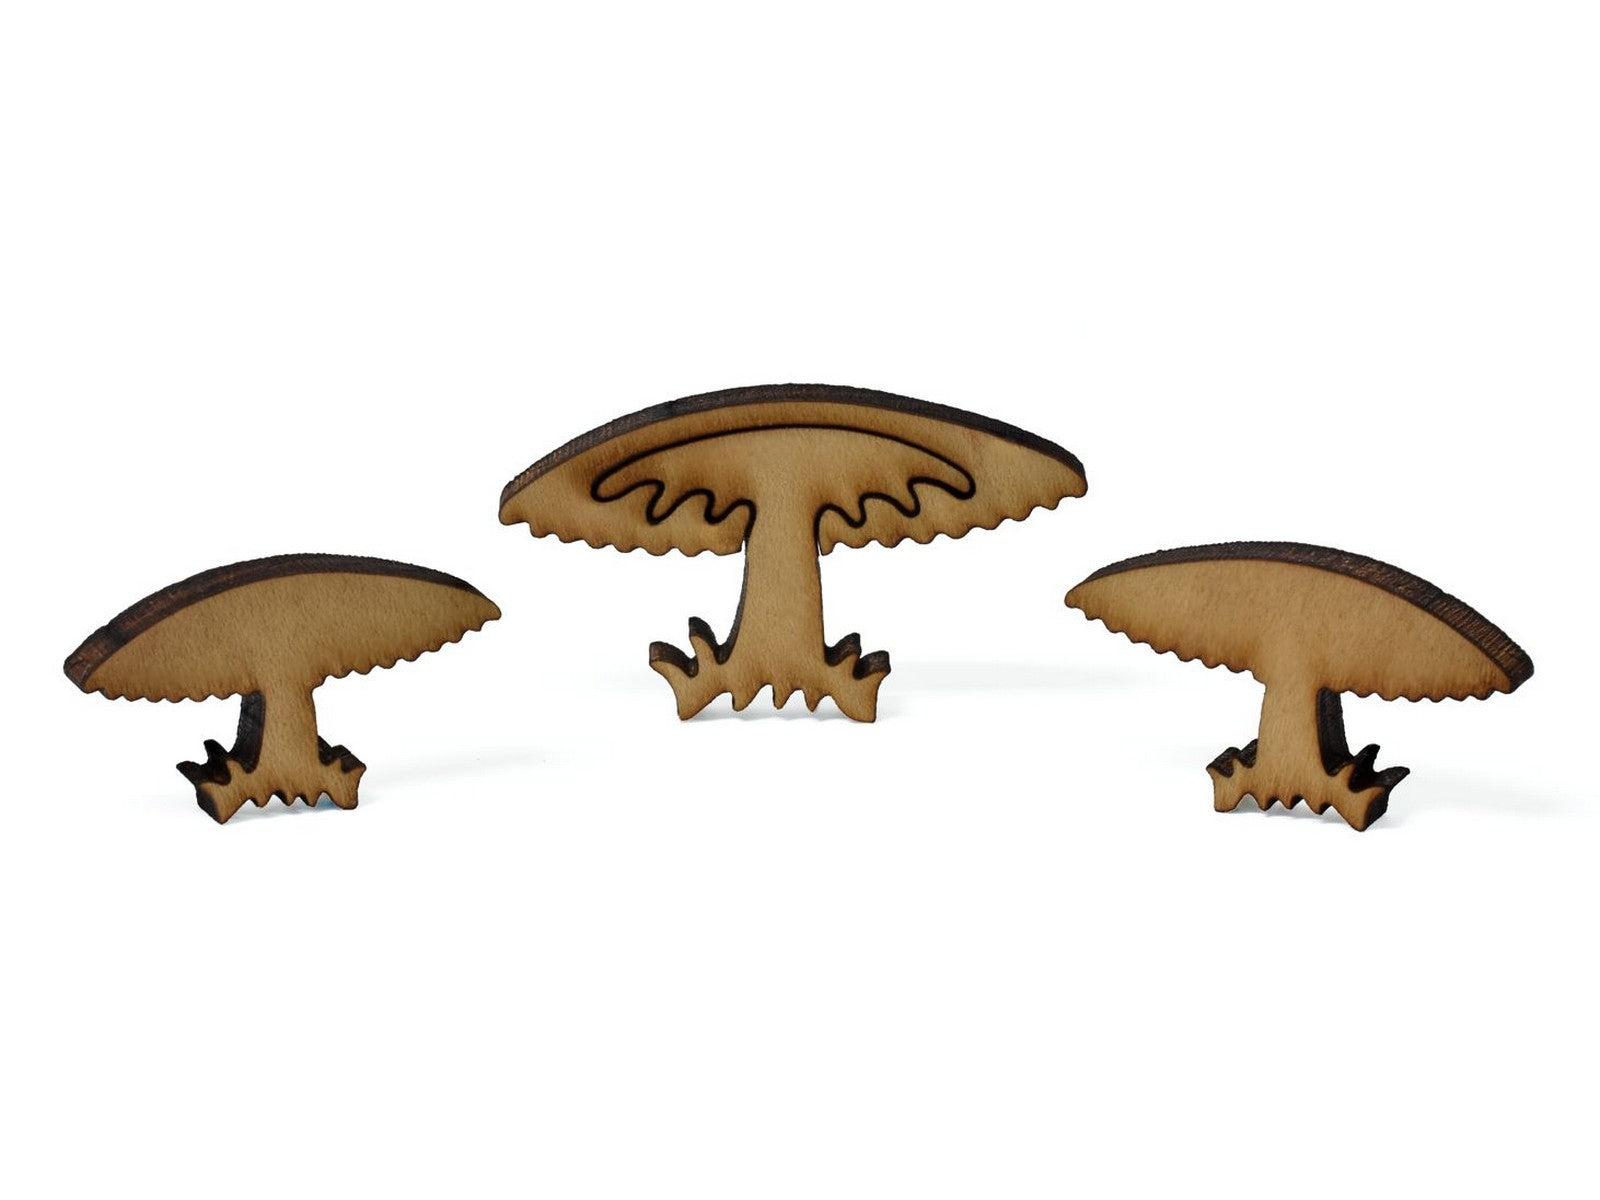 Mushrooms Wooden Jigsaw Puzzle